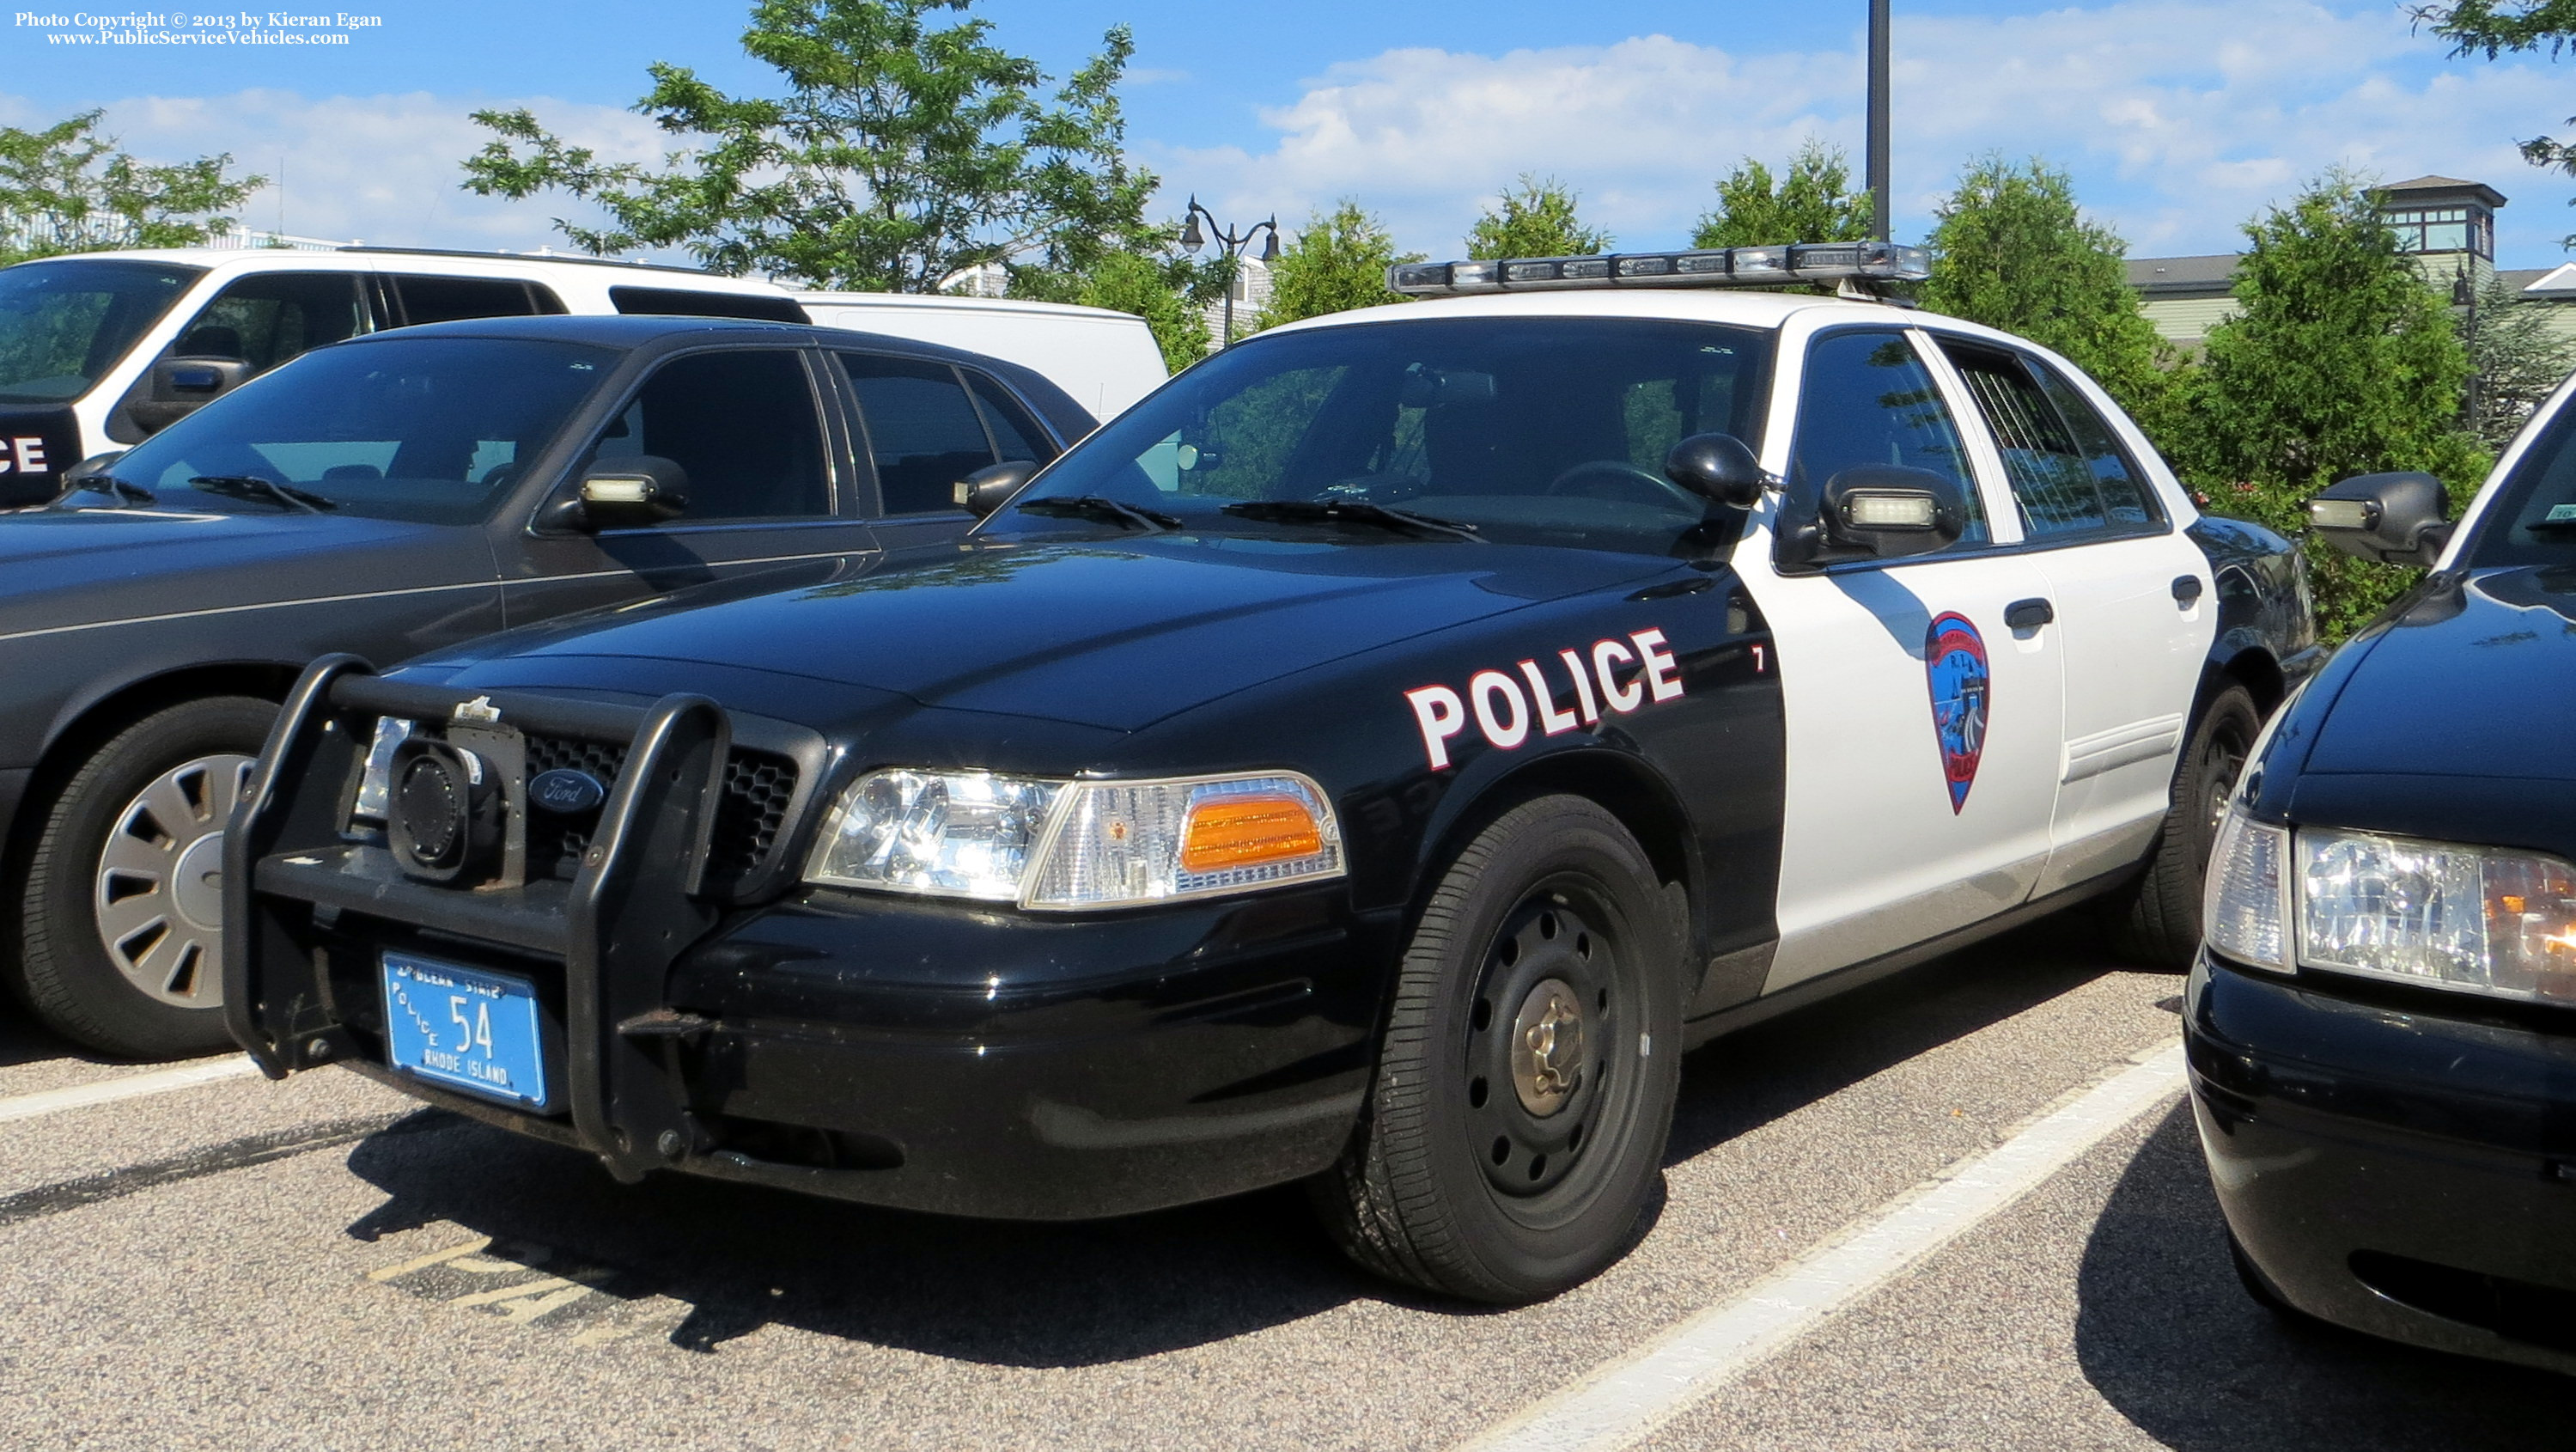 A photo  of Narragansett Police
            Car 7, a 2009-2011 Ford Crown Victoria Police Interceptor             taken by Kieran Egan